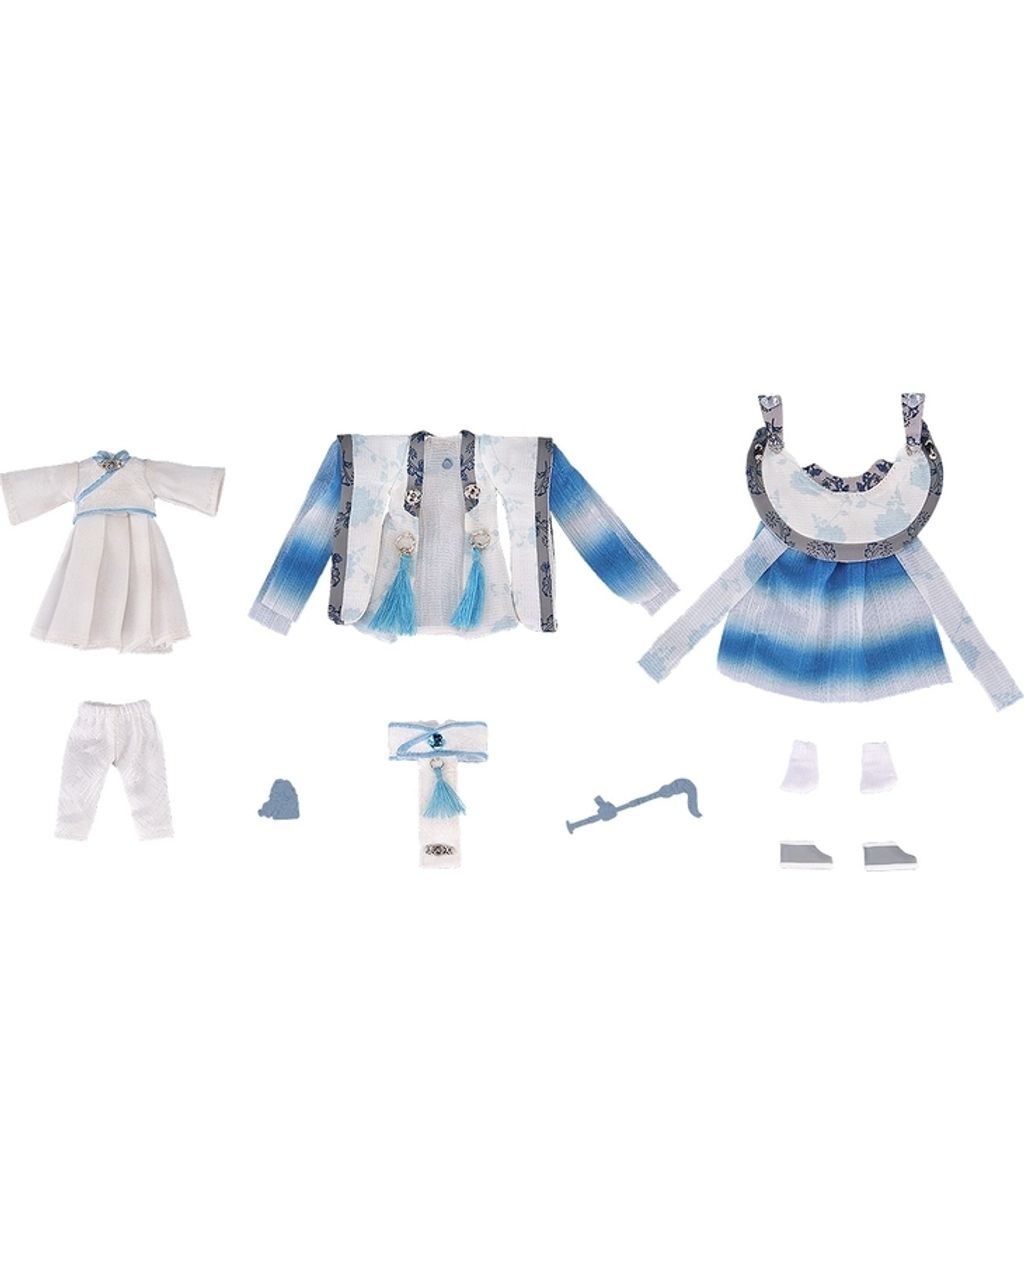 Nendoroid Doll Outfit set- Su Huan-Jen - Contest of the Endless Battle Ver.